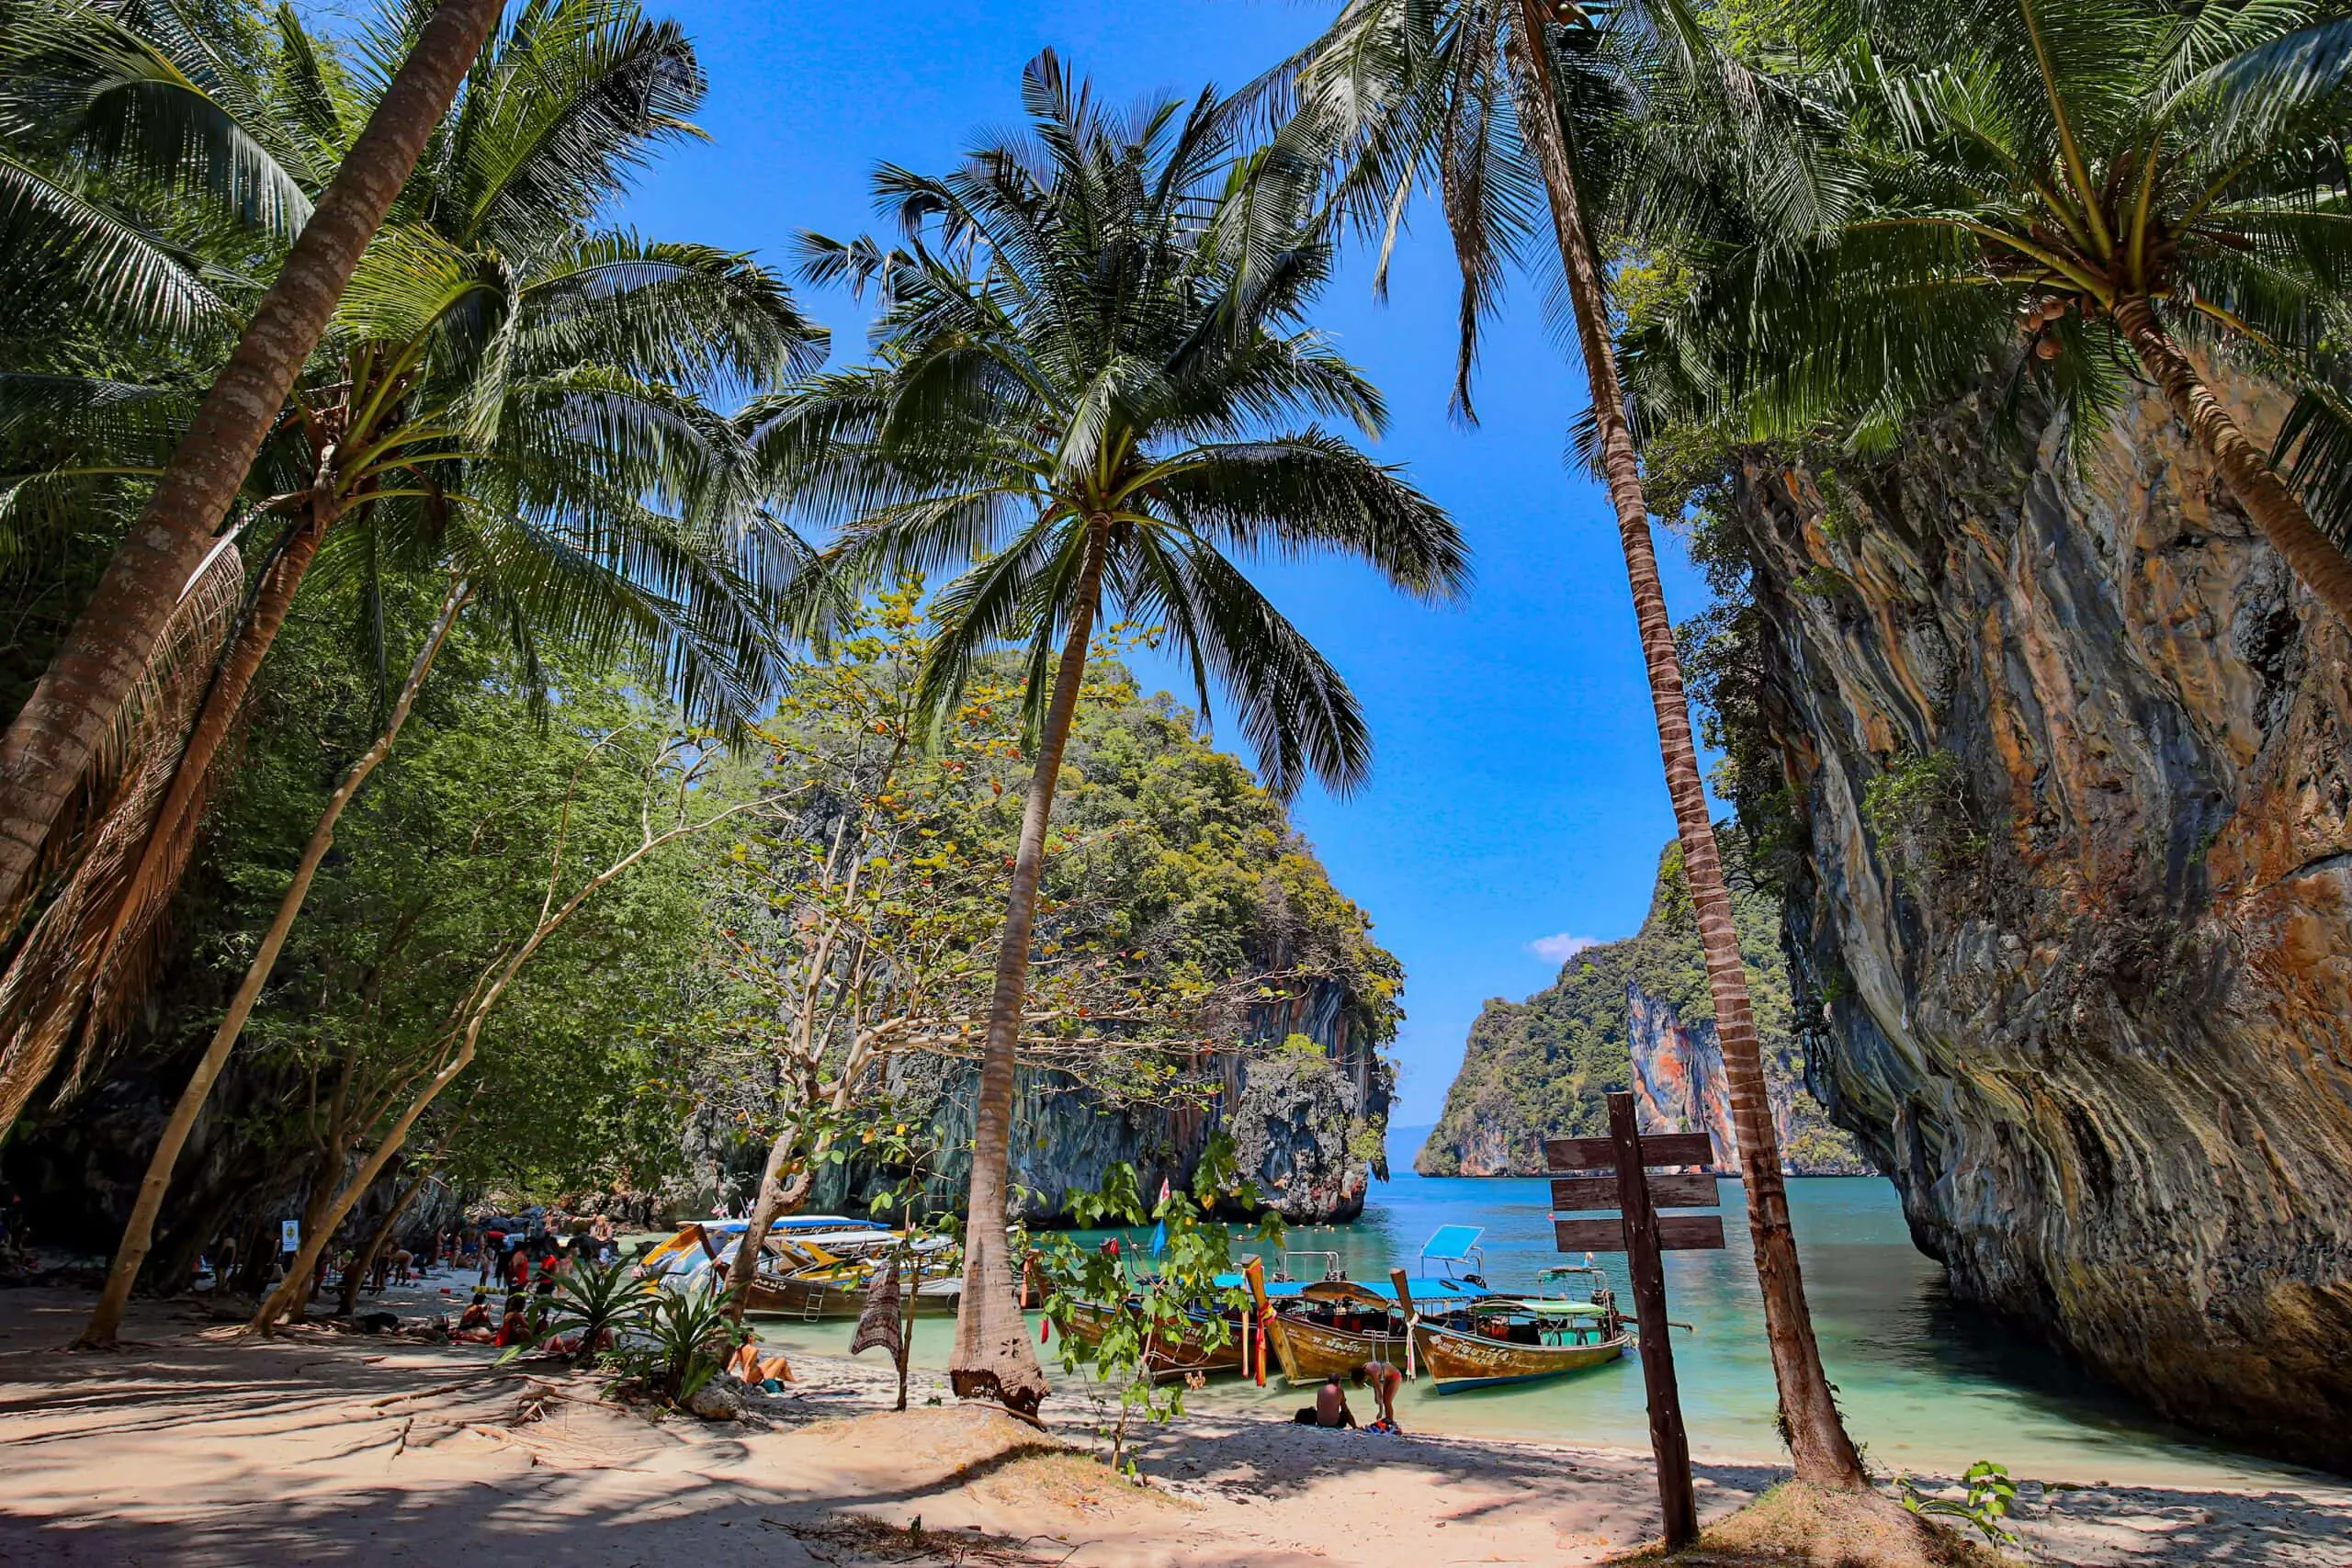 Is Phuket worth visiting?